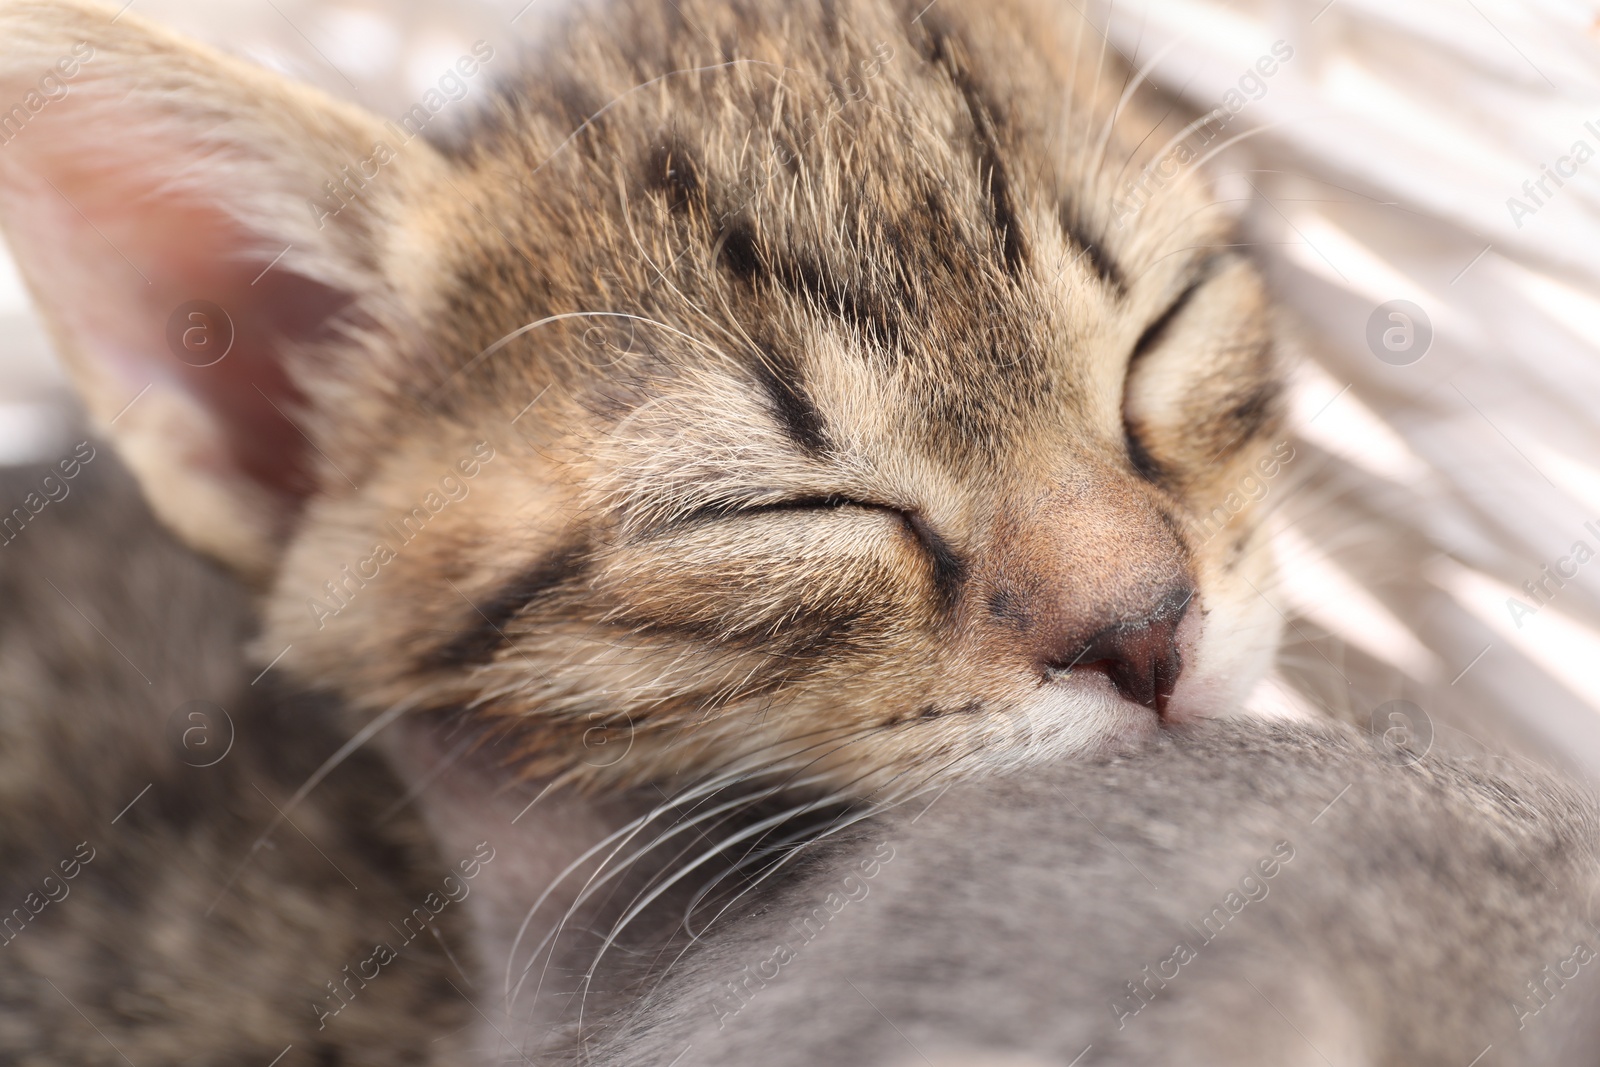 Photo of Cute fluffy kitten, closeup view. Baby animal